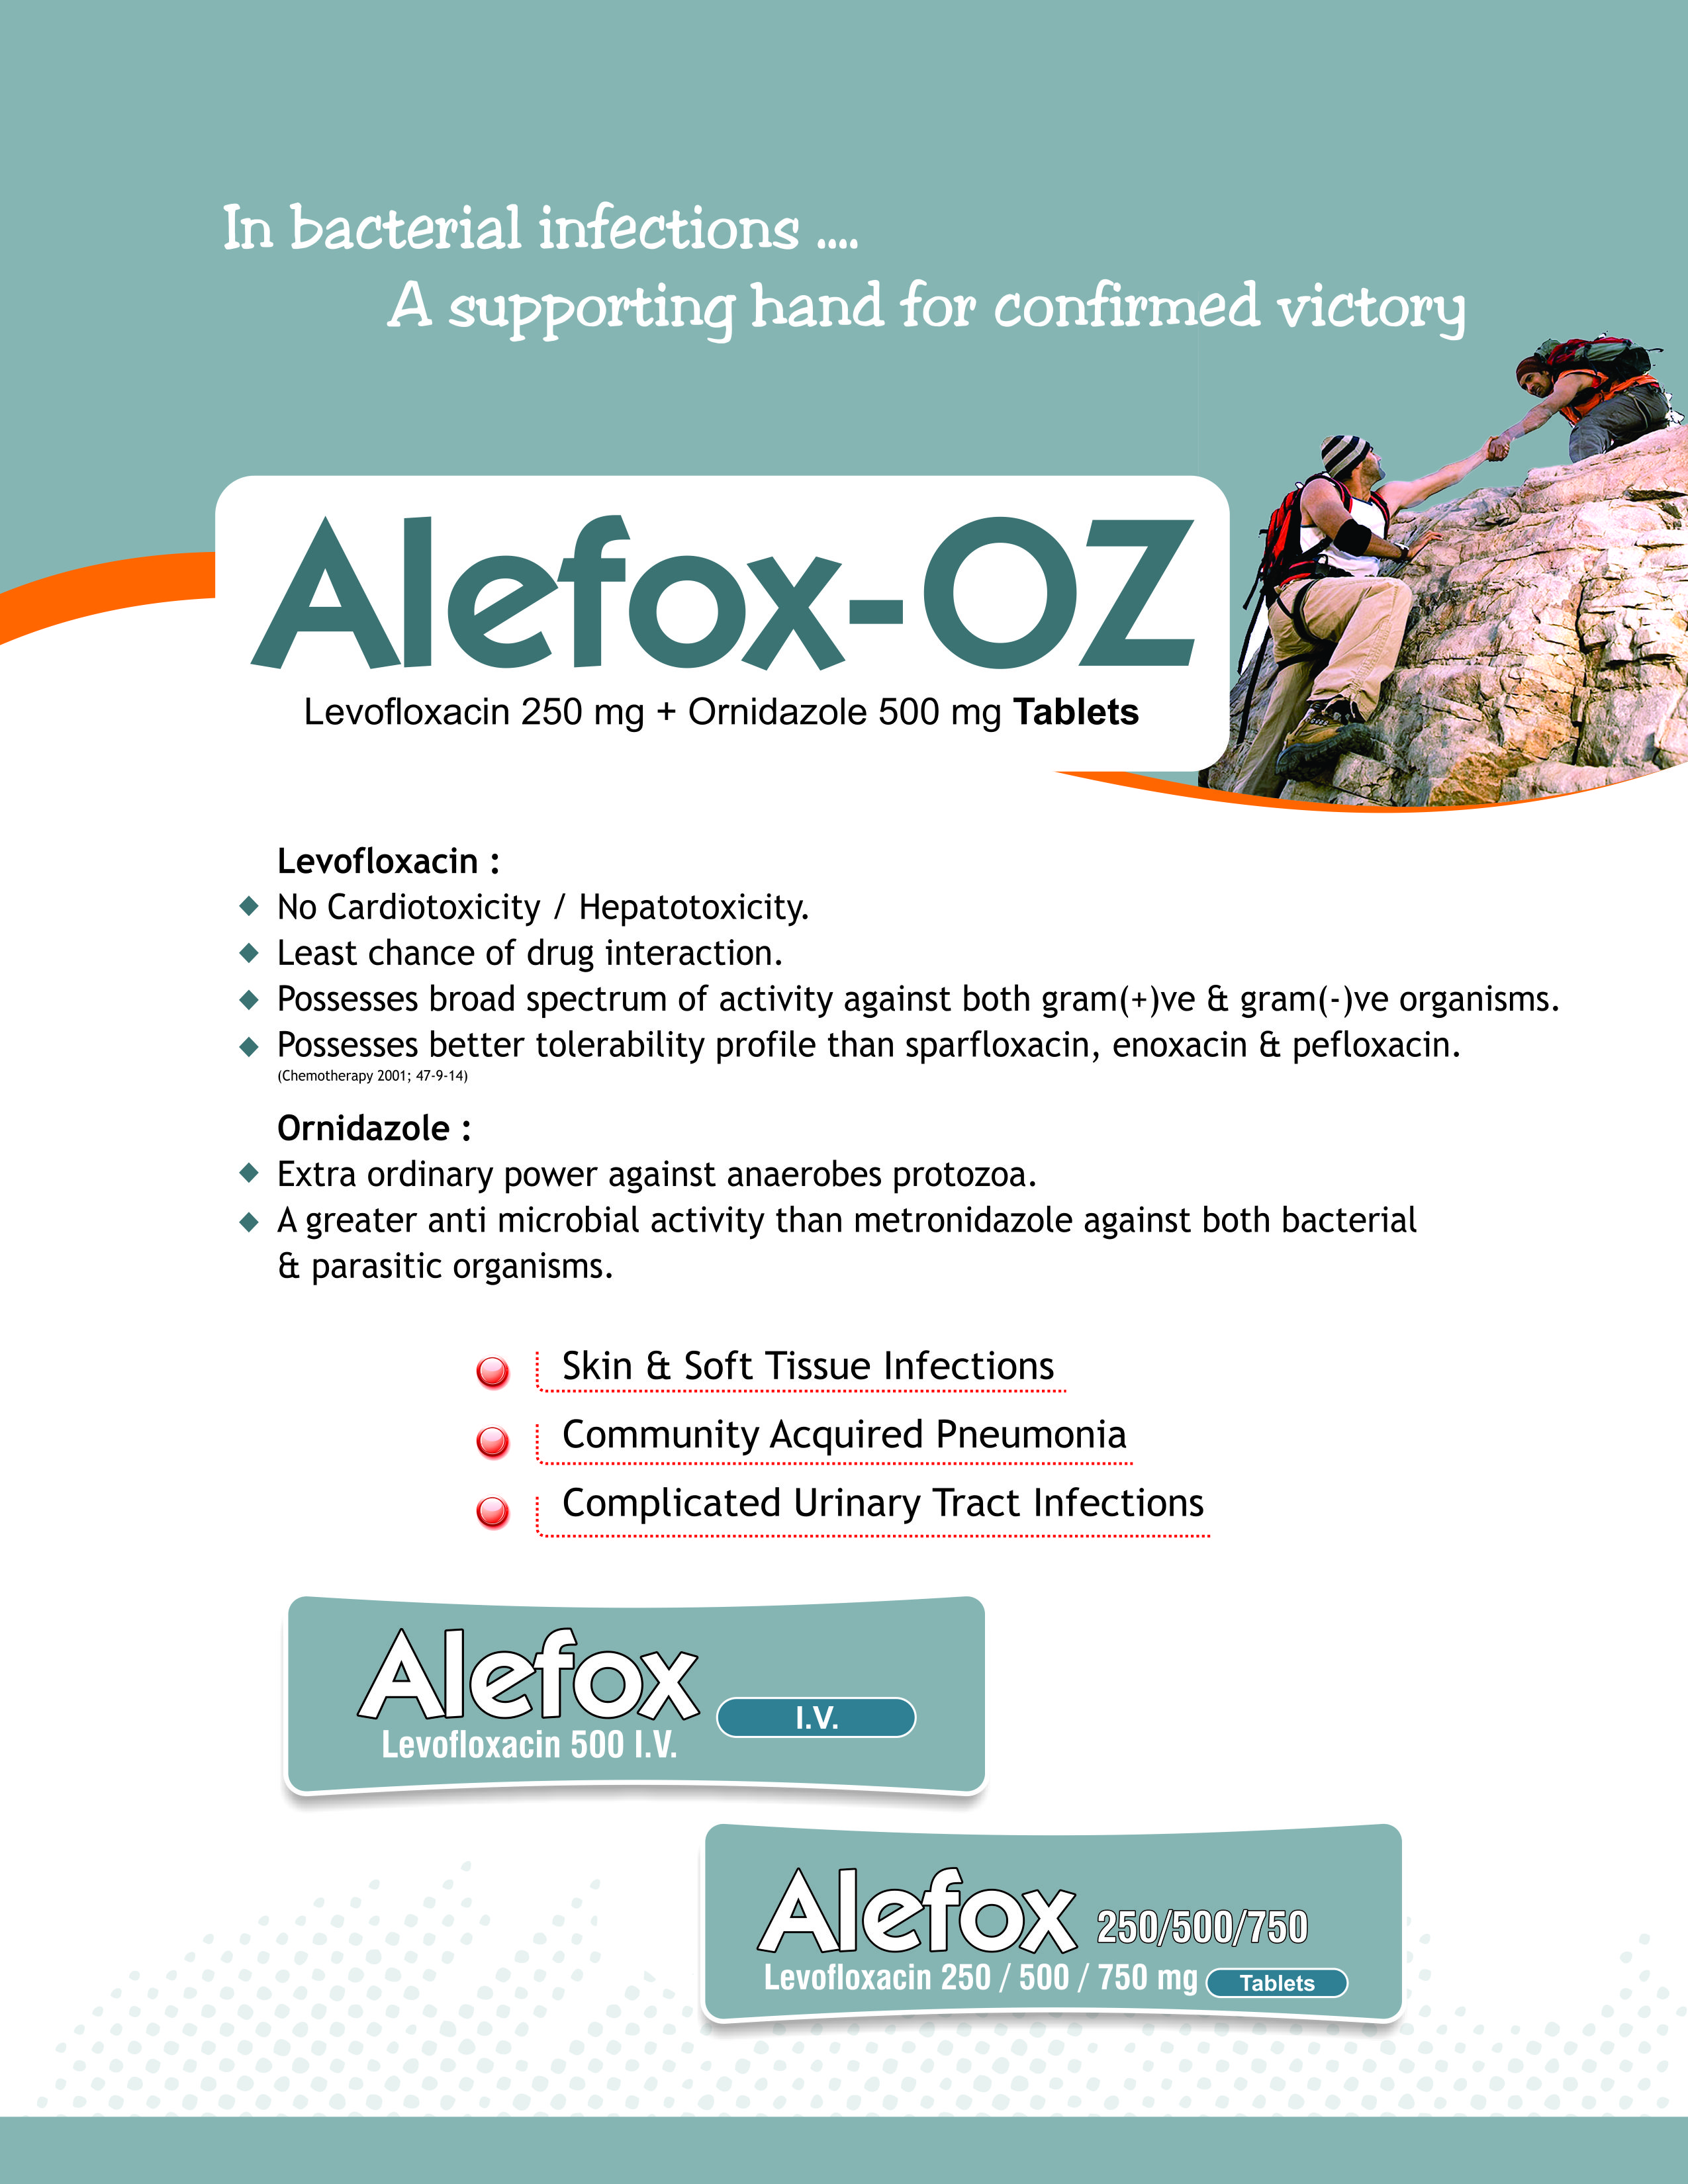 Alefox-OZ,allengeindia,antibacterial